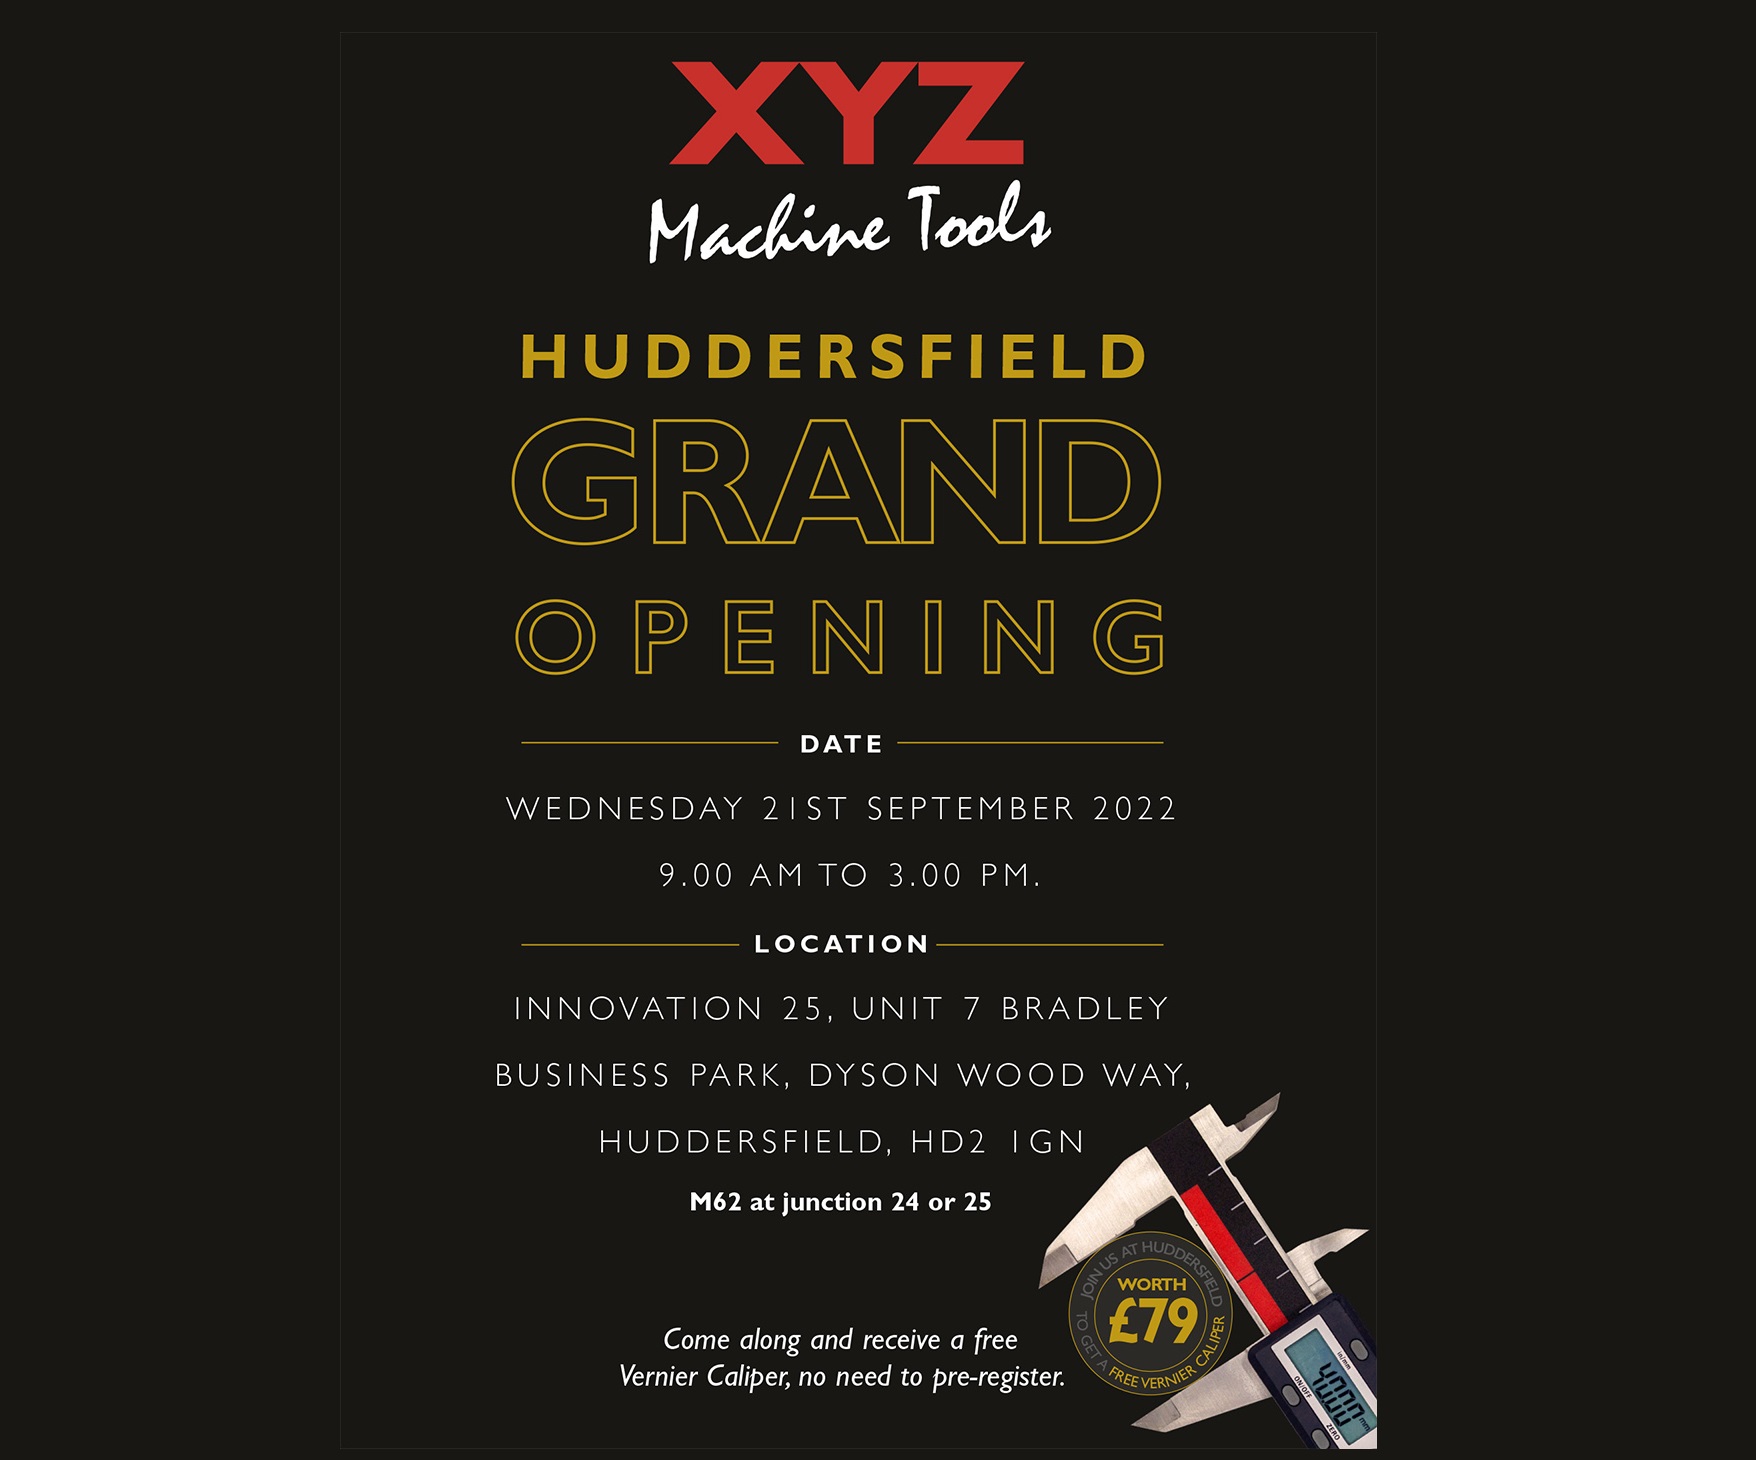 XYZ Machine Tools to open new showroom